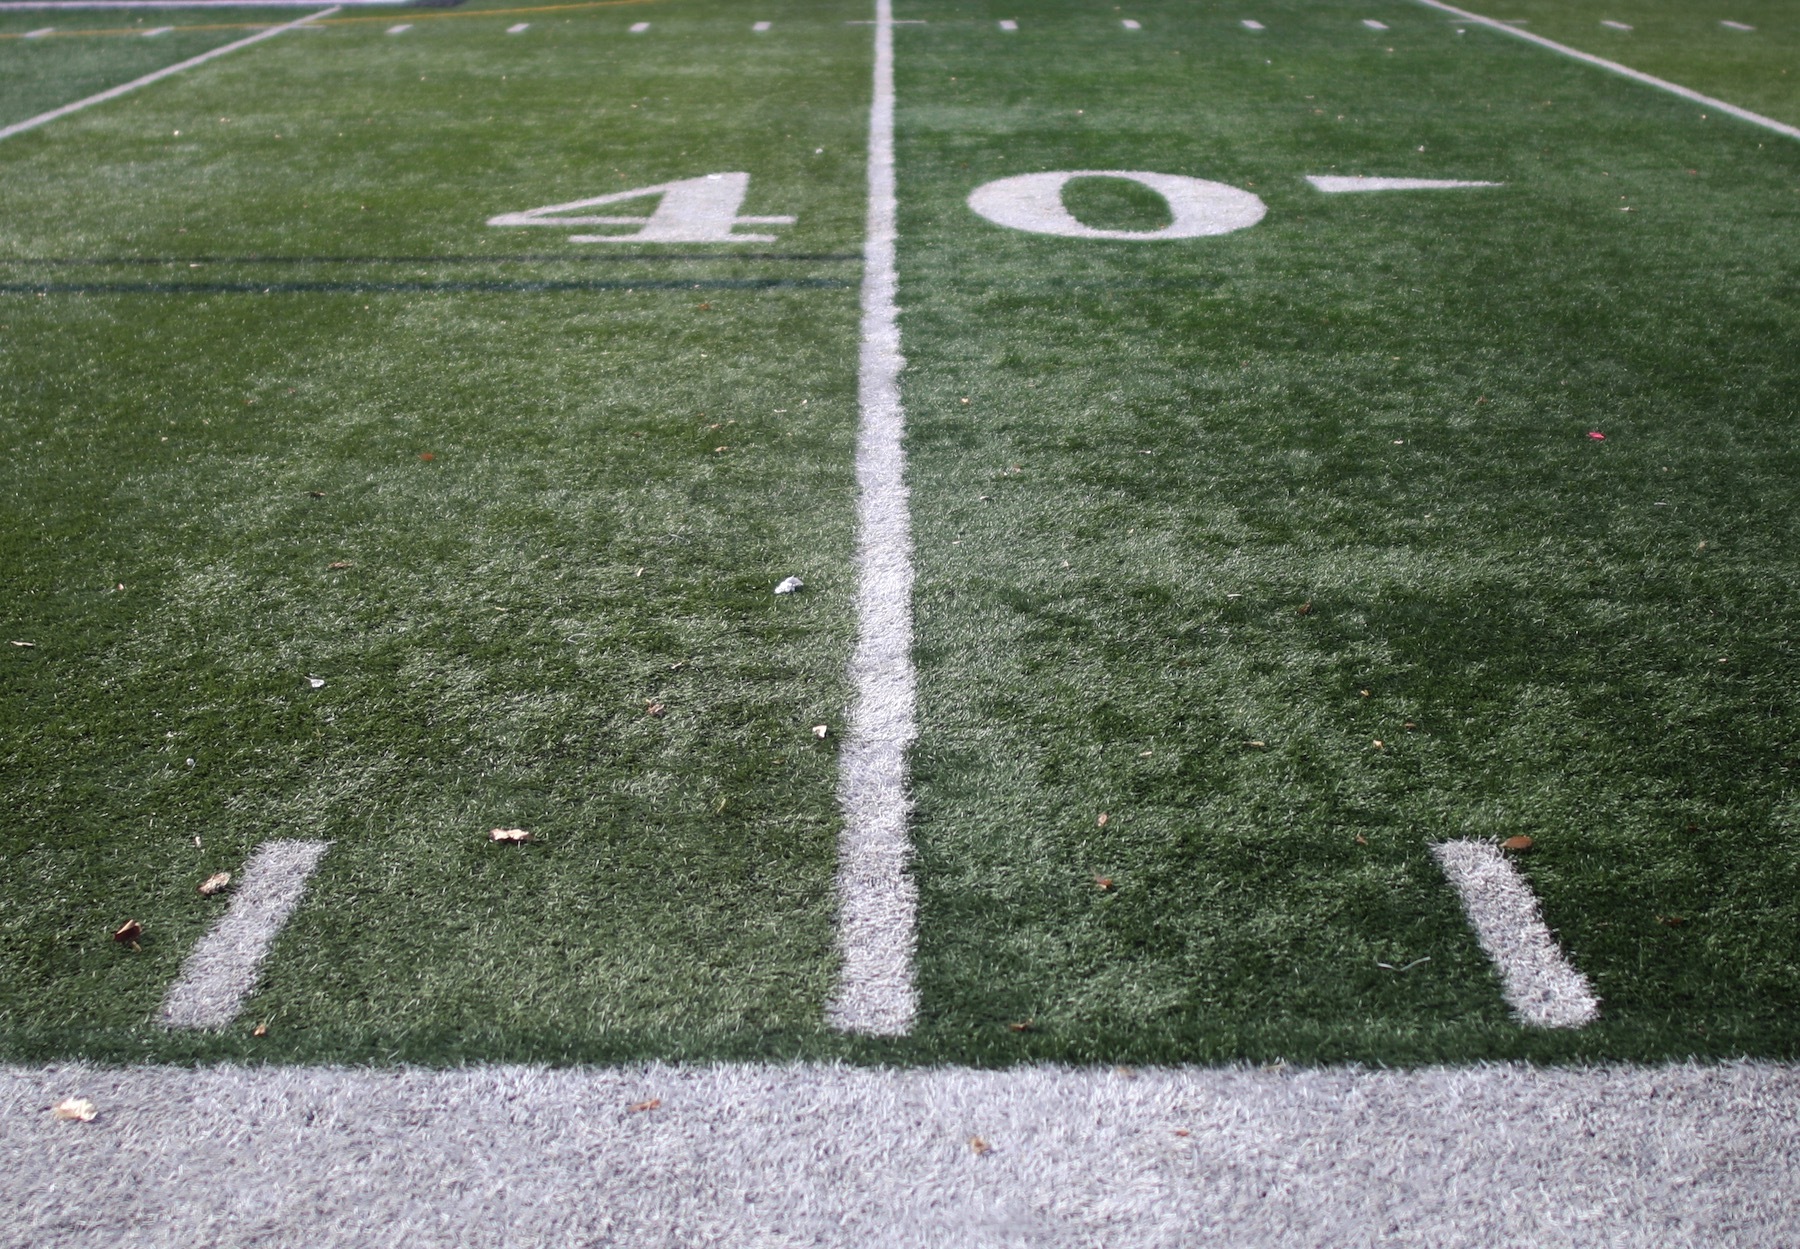 football field at opposing 40 yard line